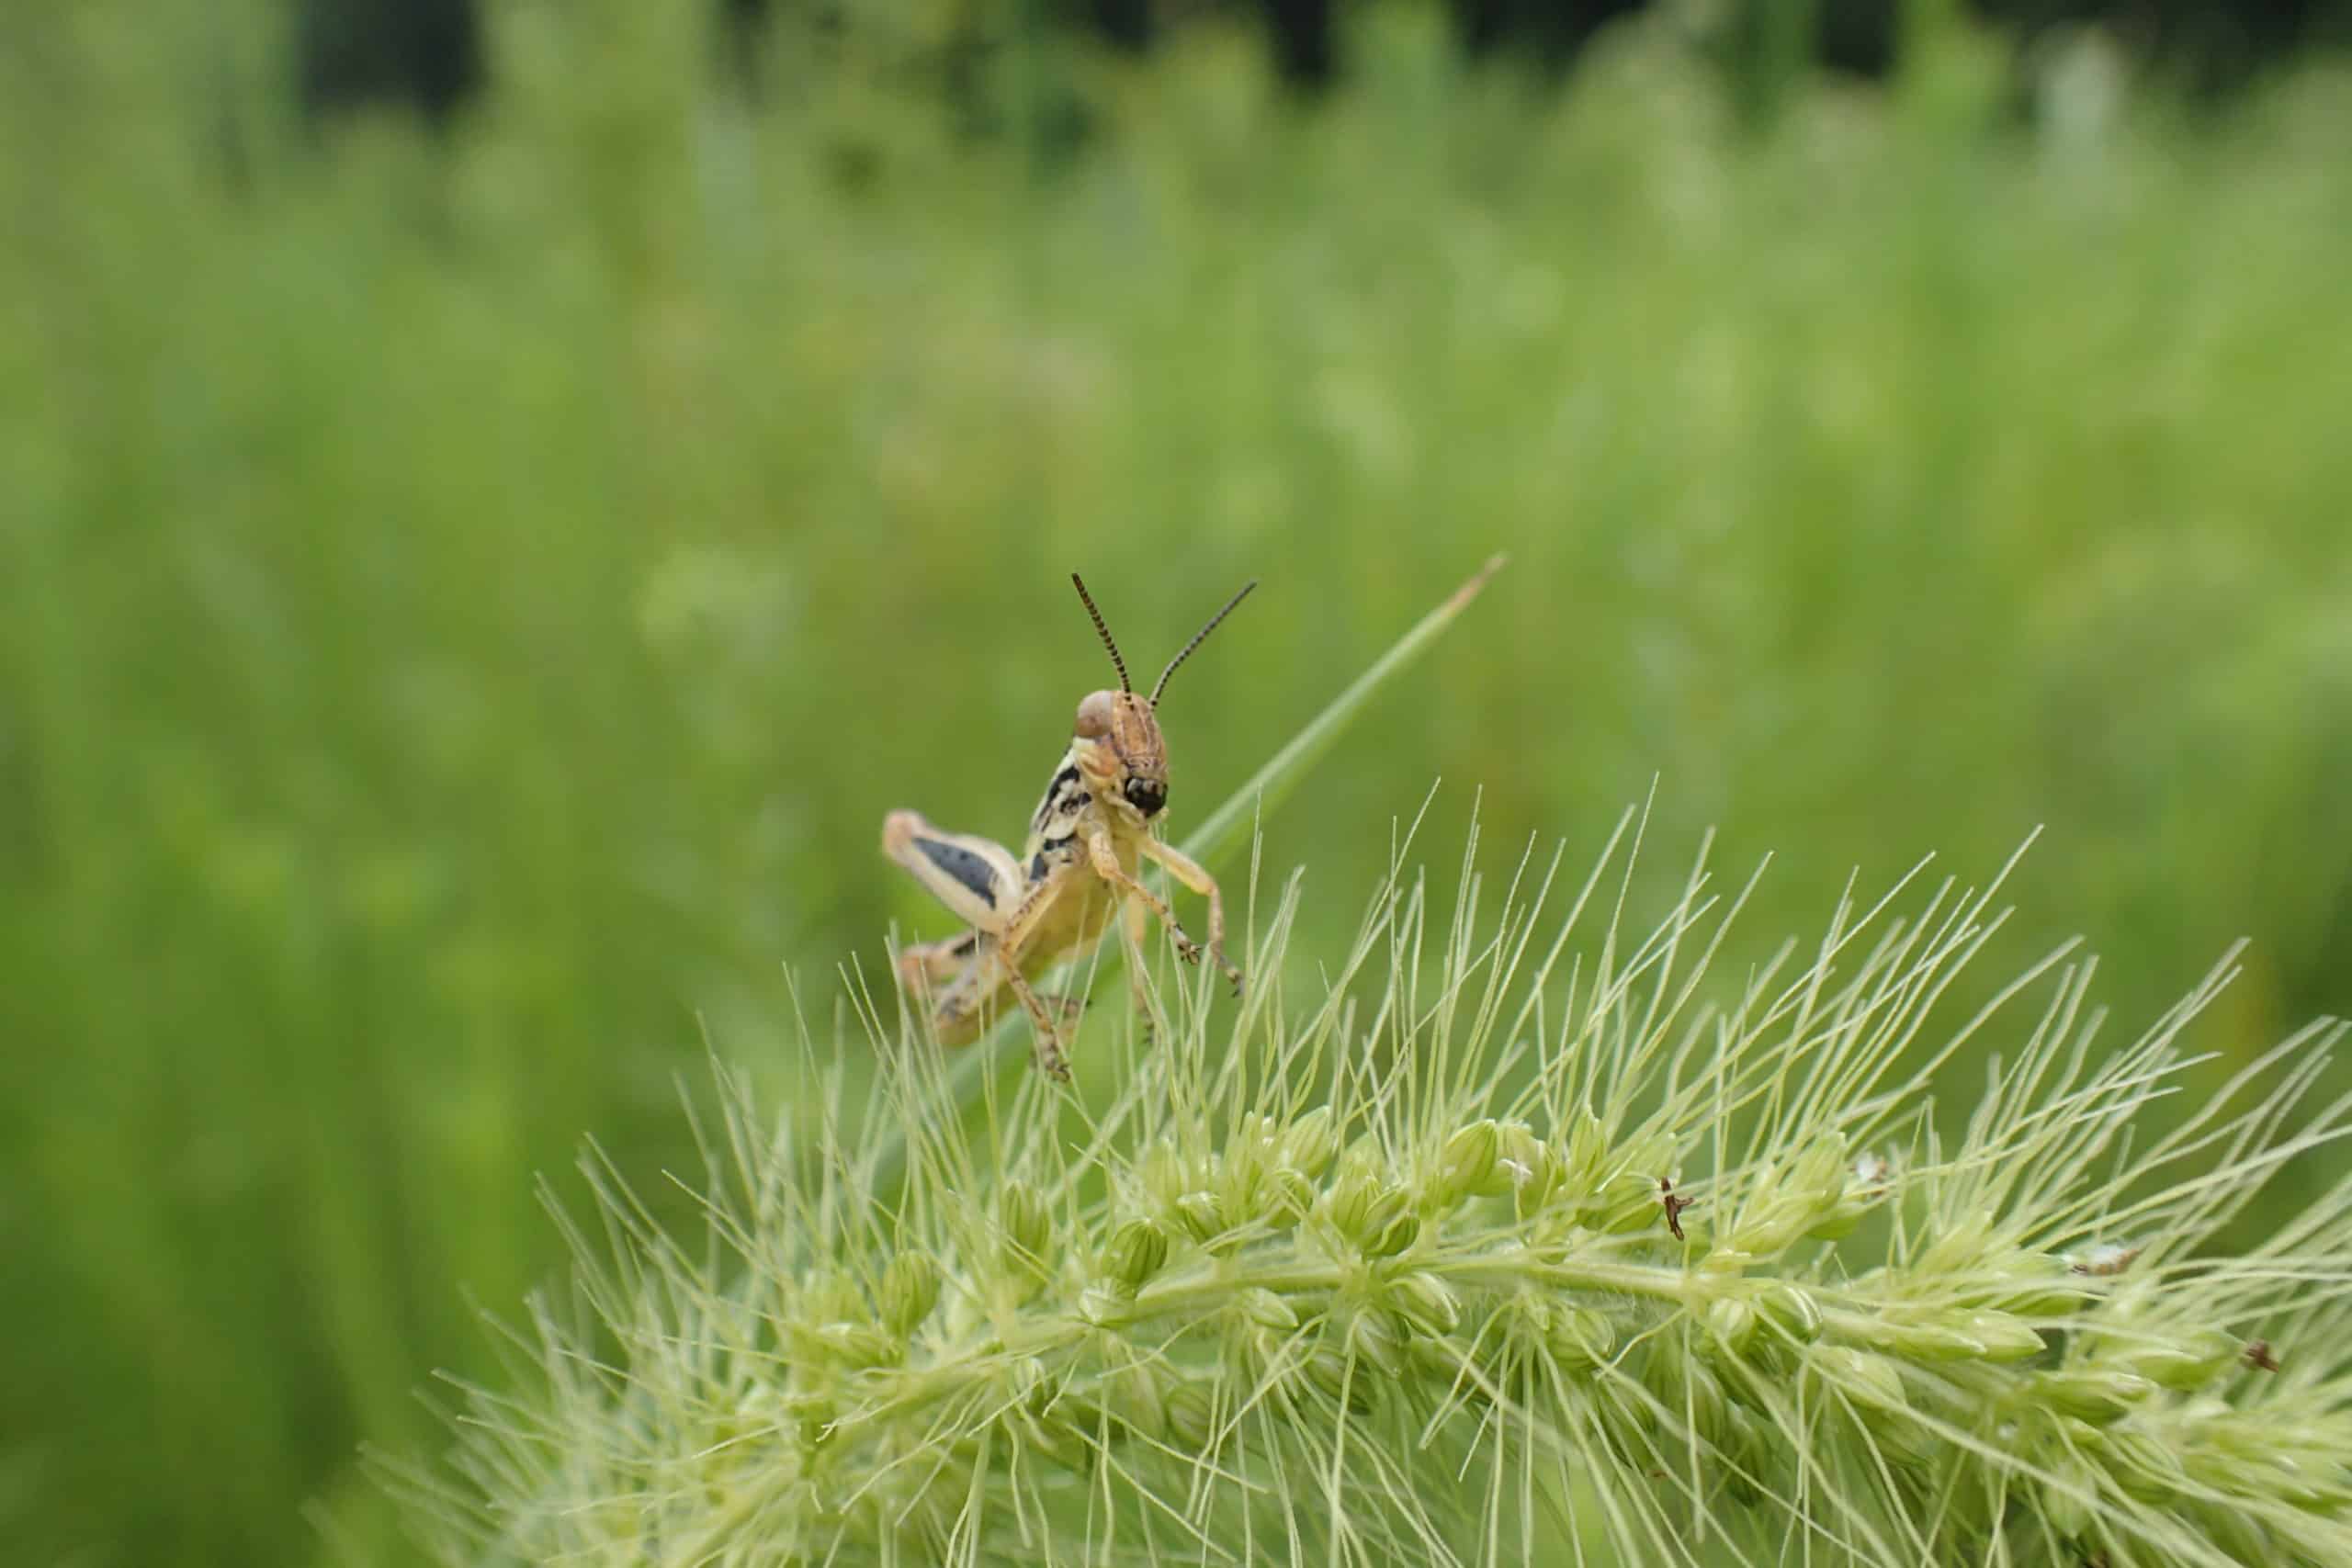 Stripy grasshopper on foxtail grass